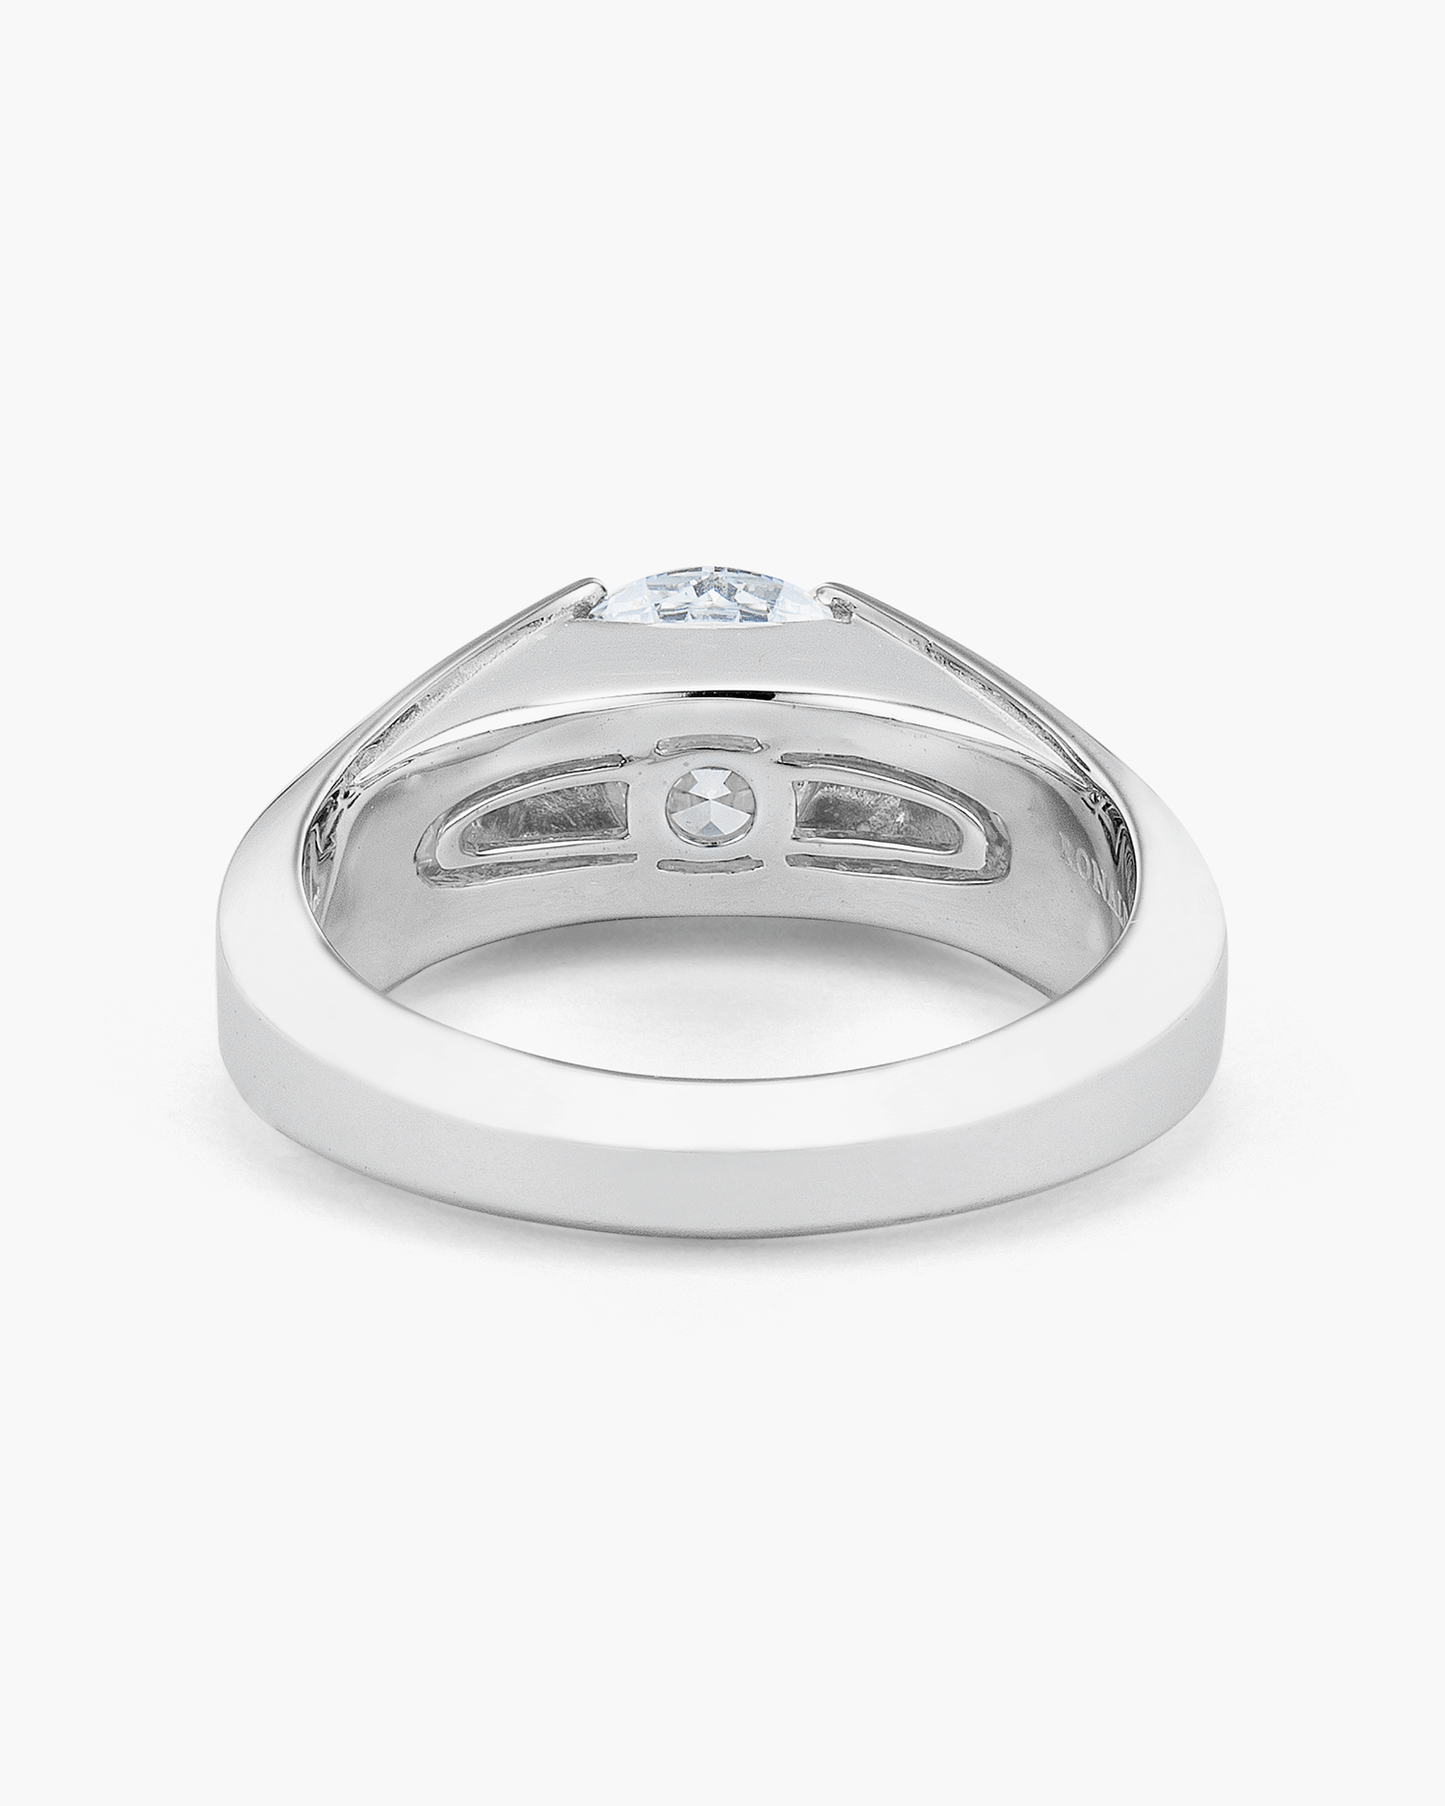 2.02 carat Round Cut Diamond Gentlemen's Ring